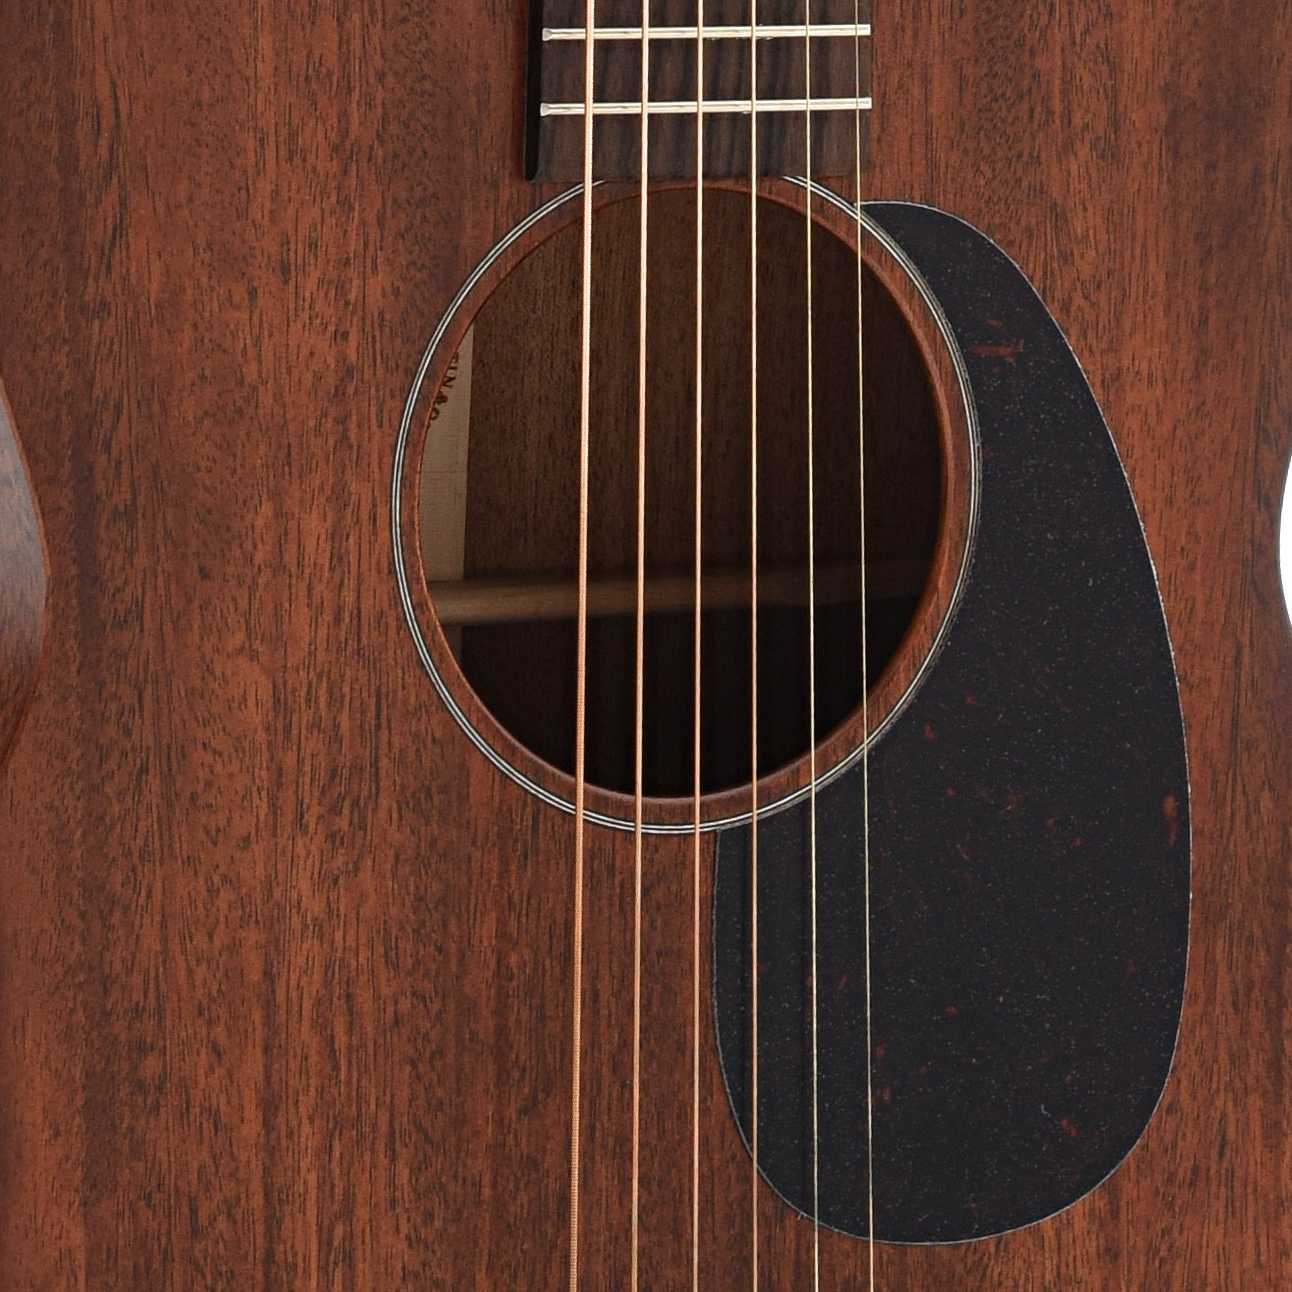 Soundhole and Pickguard of Martin 000-15SM Mahogany Guitar